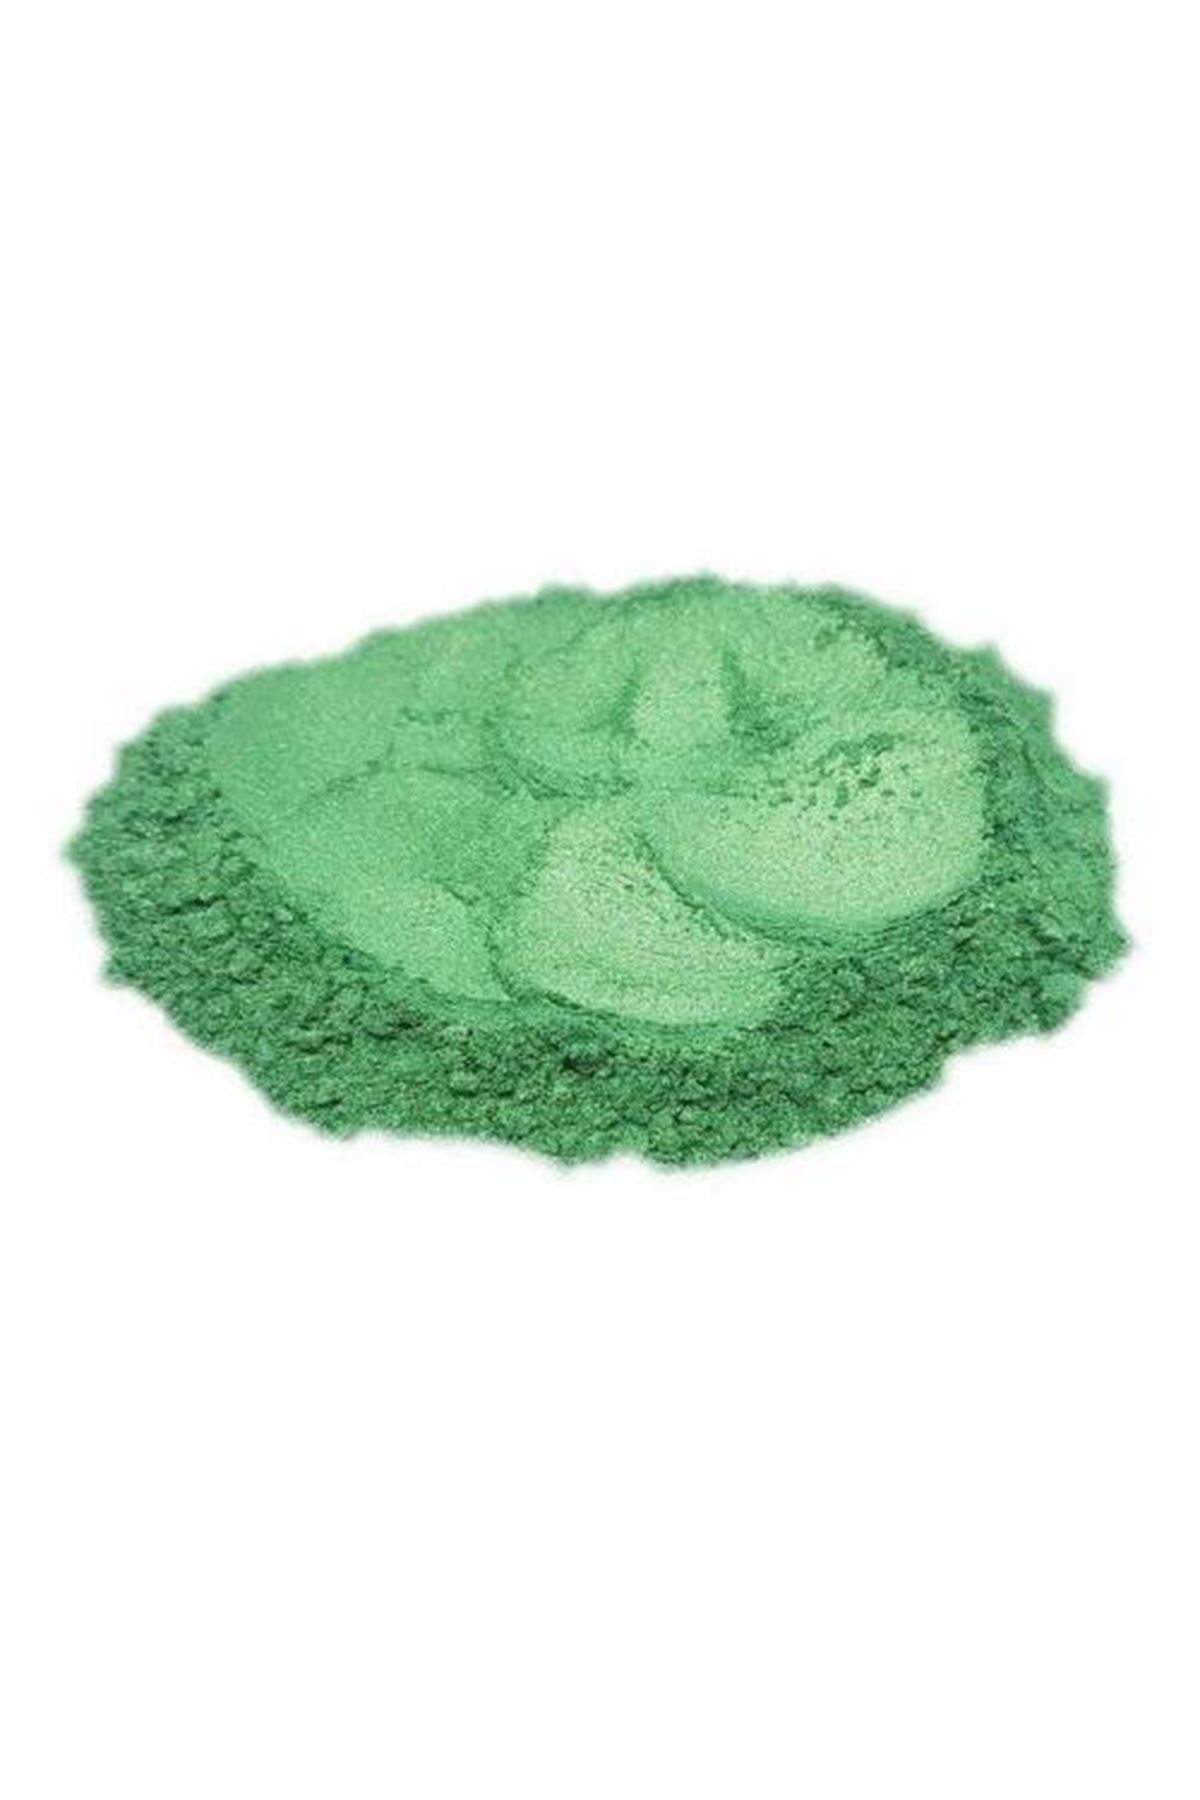 Brtr 10 Gr Green Apple Epoksi Metalik Toz Pigment(yeşil elma)